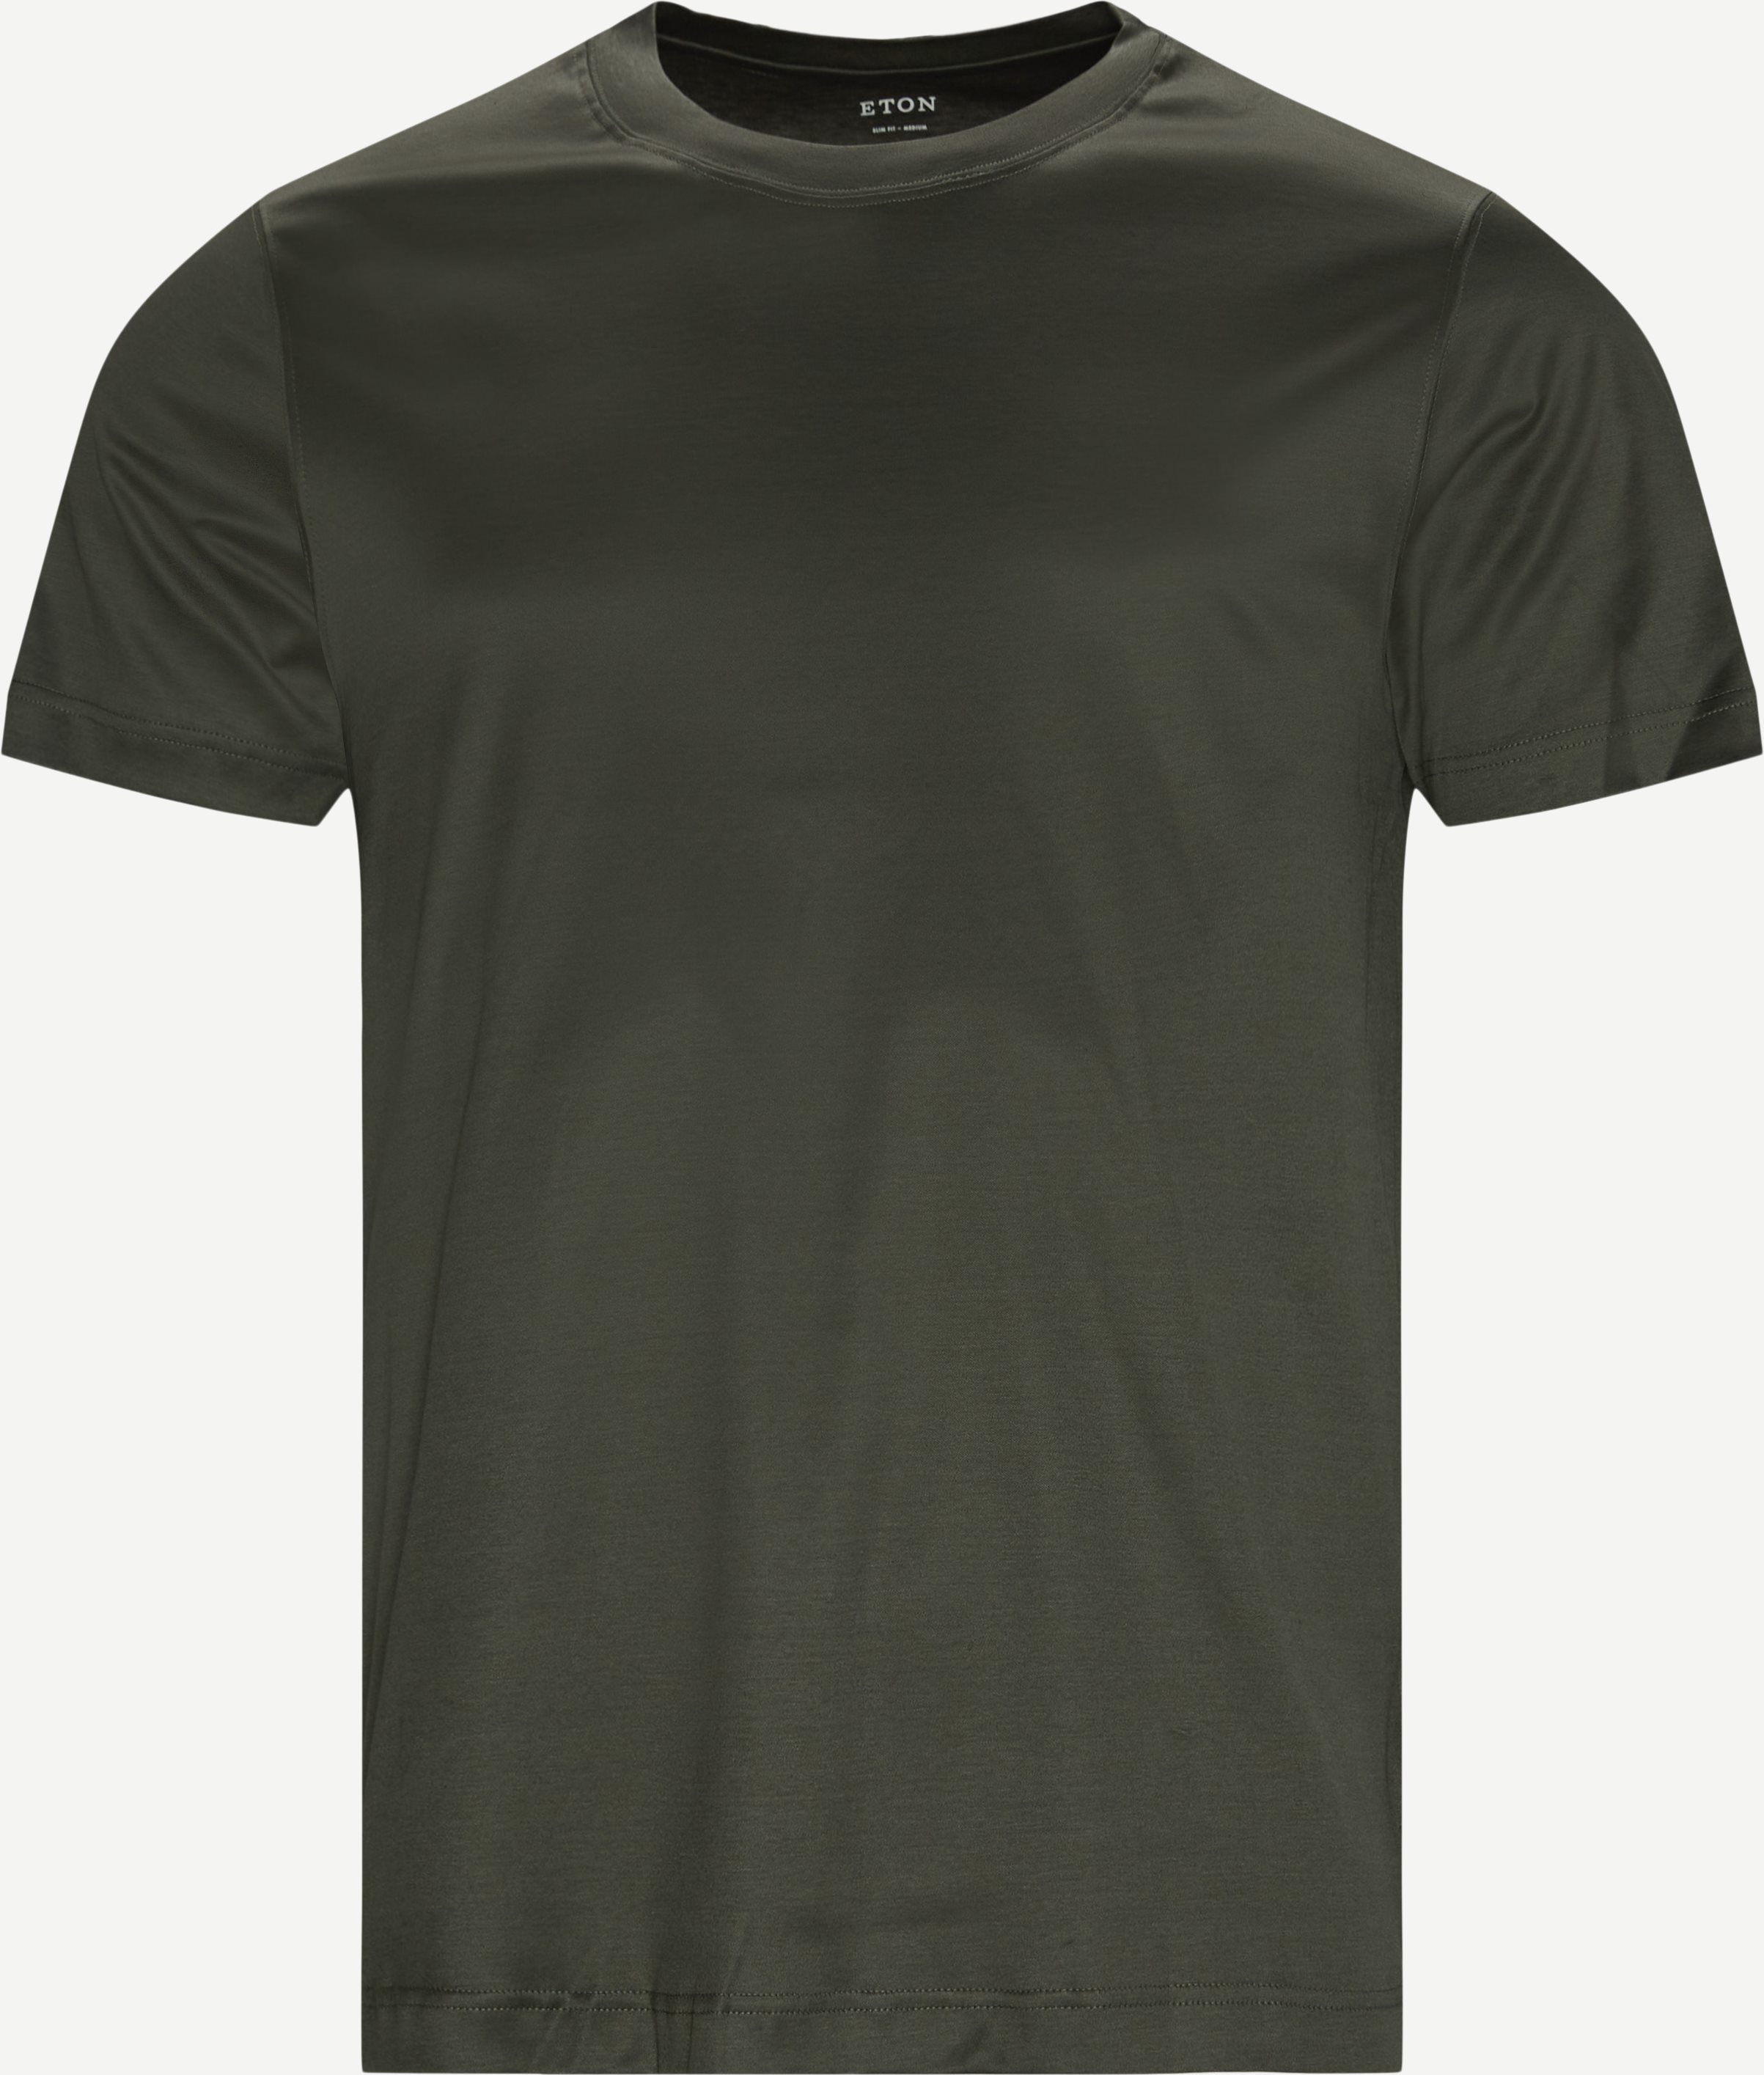 0592 T-shirt - T-shirts - Slim fit - Army